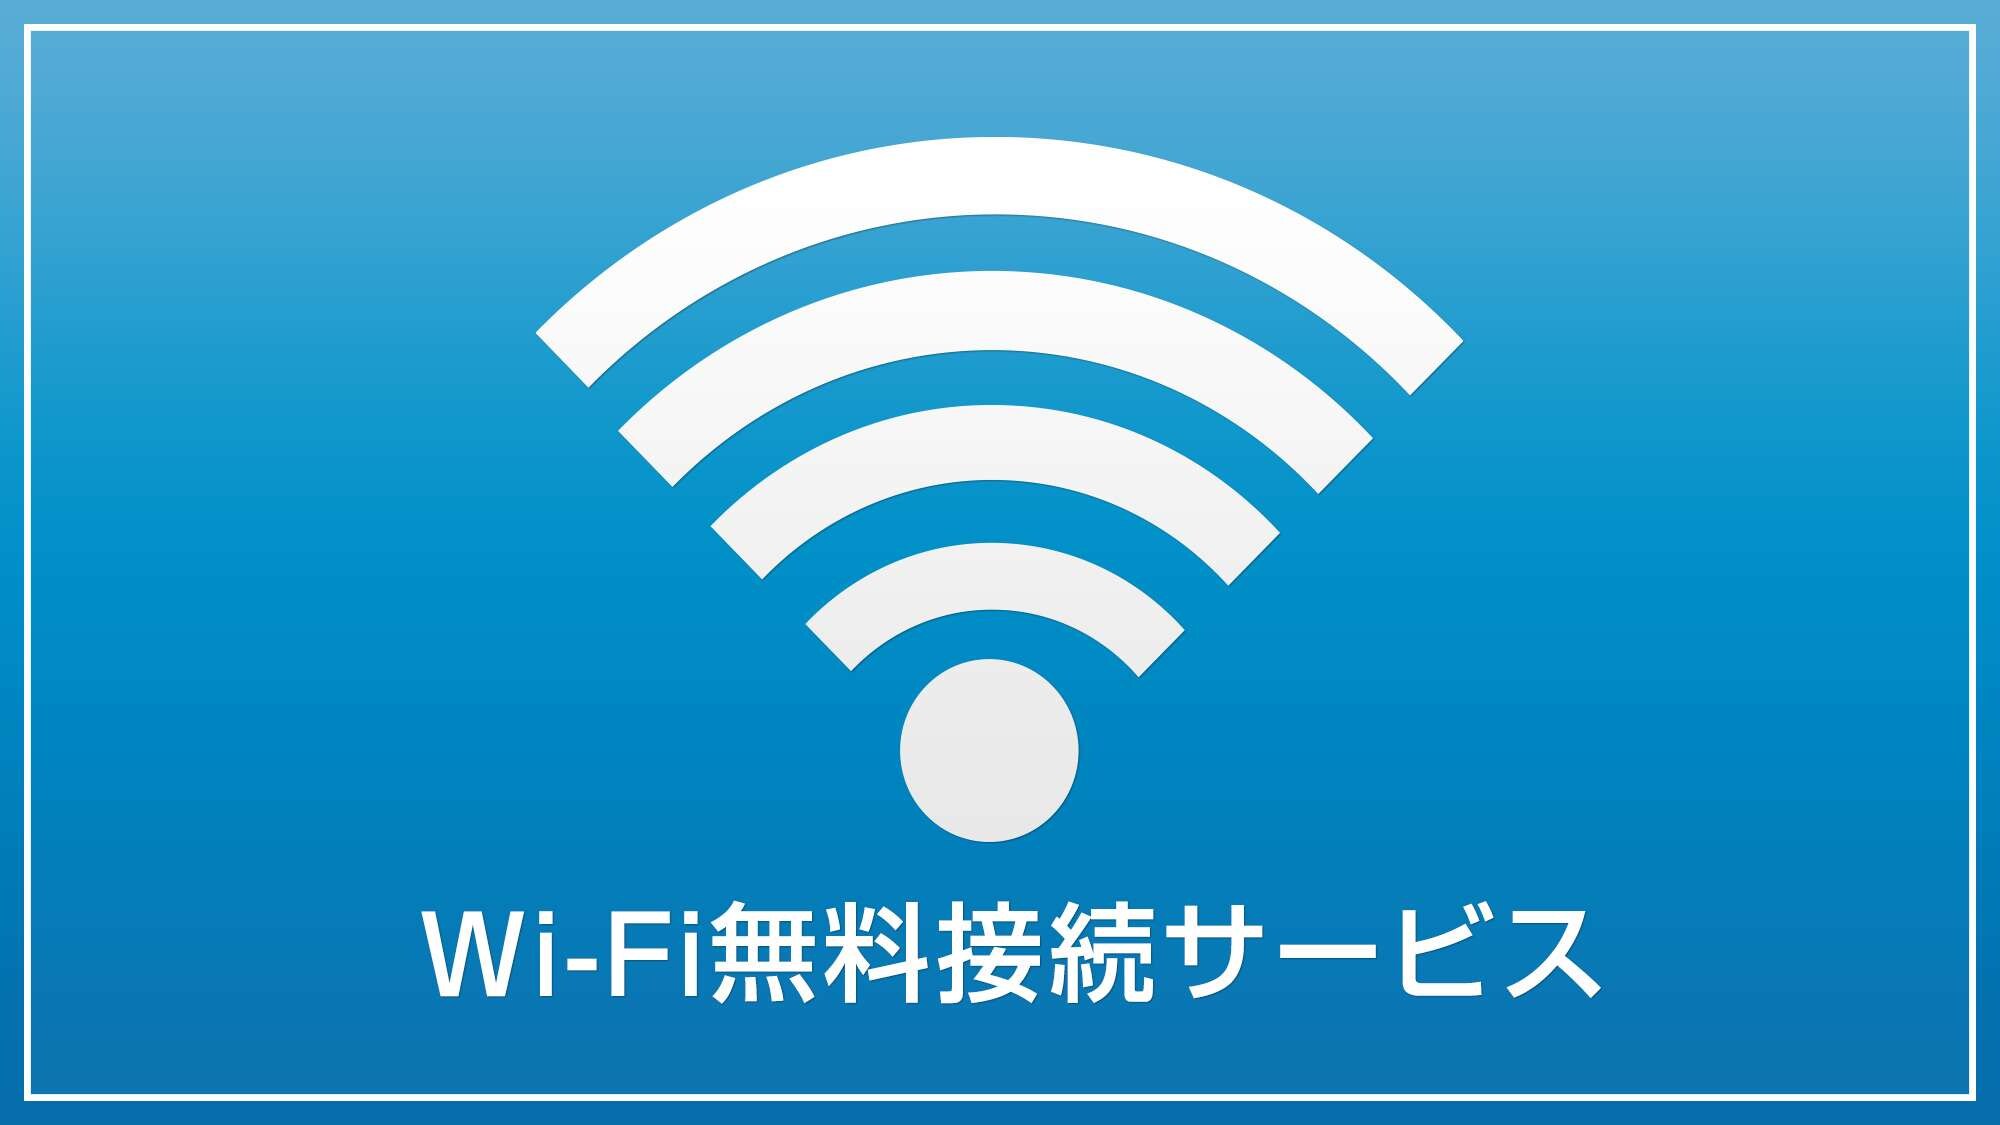 Wi-Fi connection OK